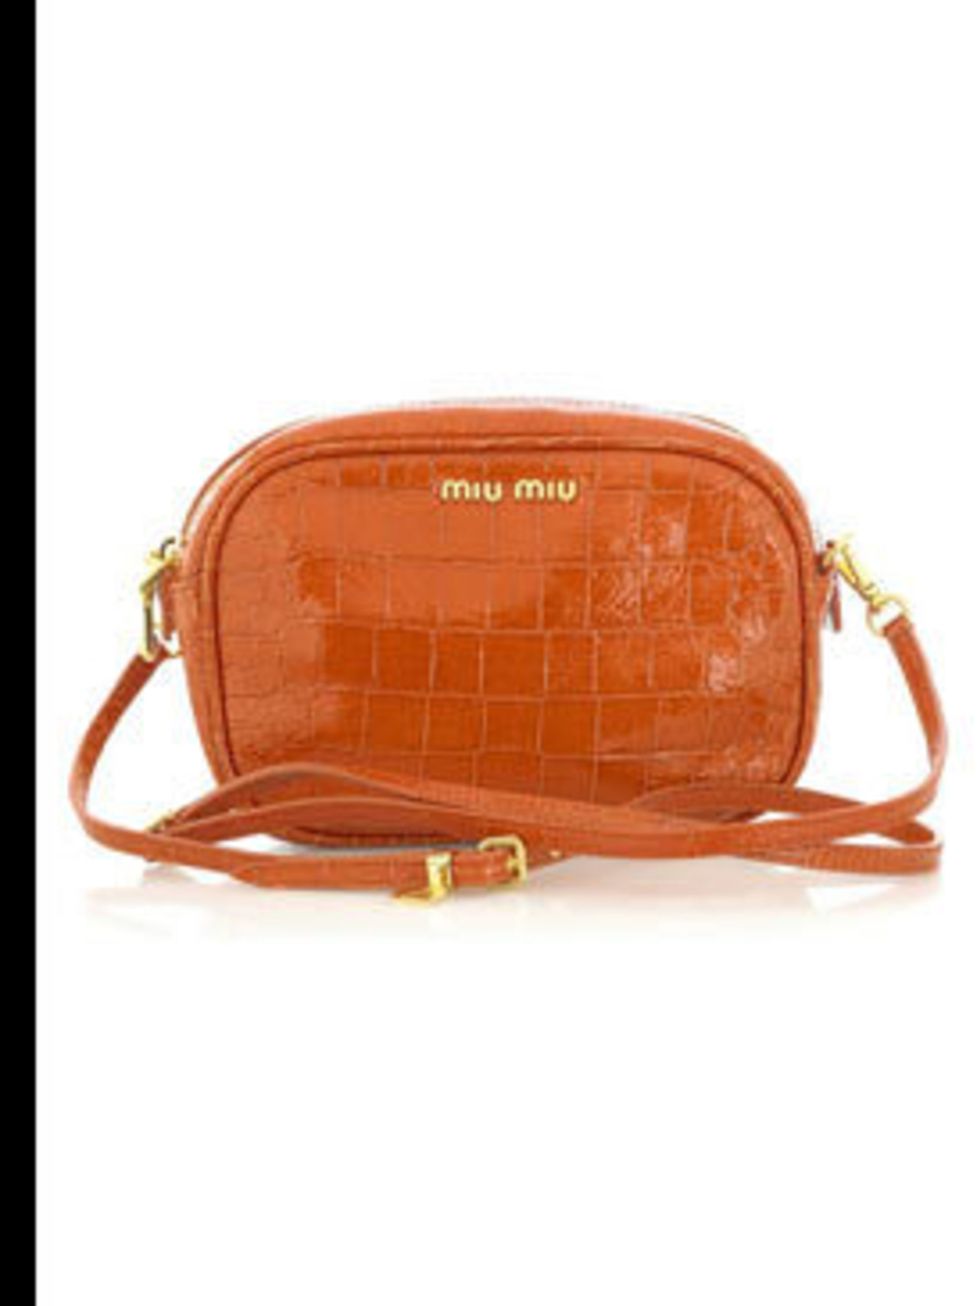 <p>Leather clutch, £206 by Miu Miu at <a href="http://www.net-a-porter.com/product/38732">Net-a-Porter</a></p>